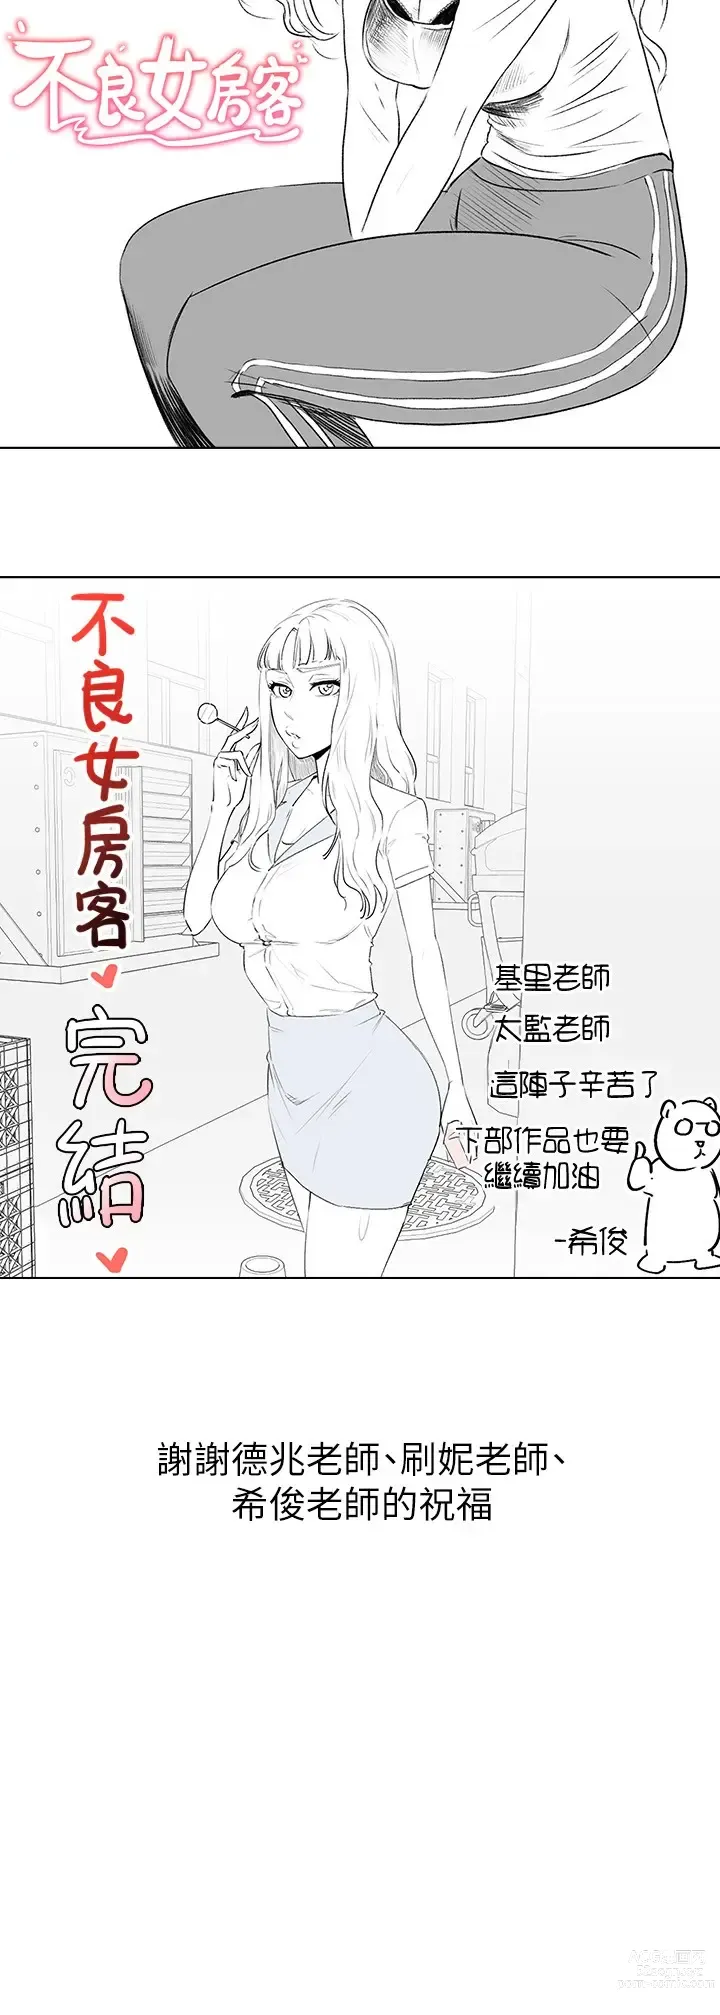 Page 1434 of manga 不良女房客 41-80